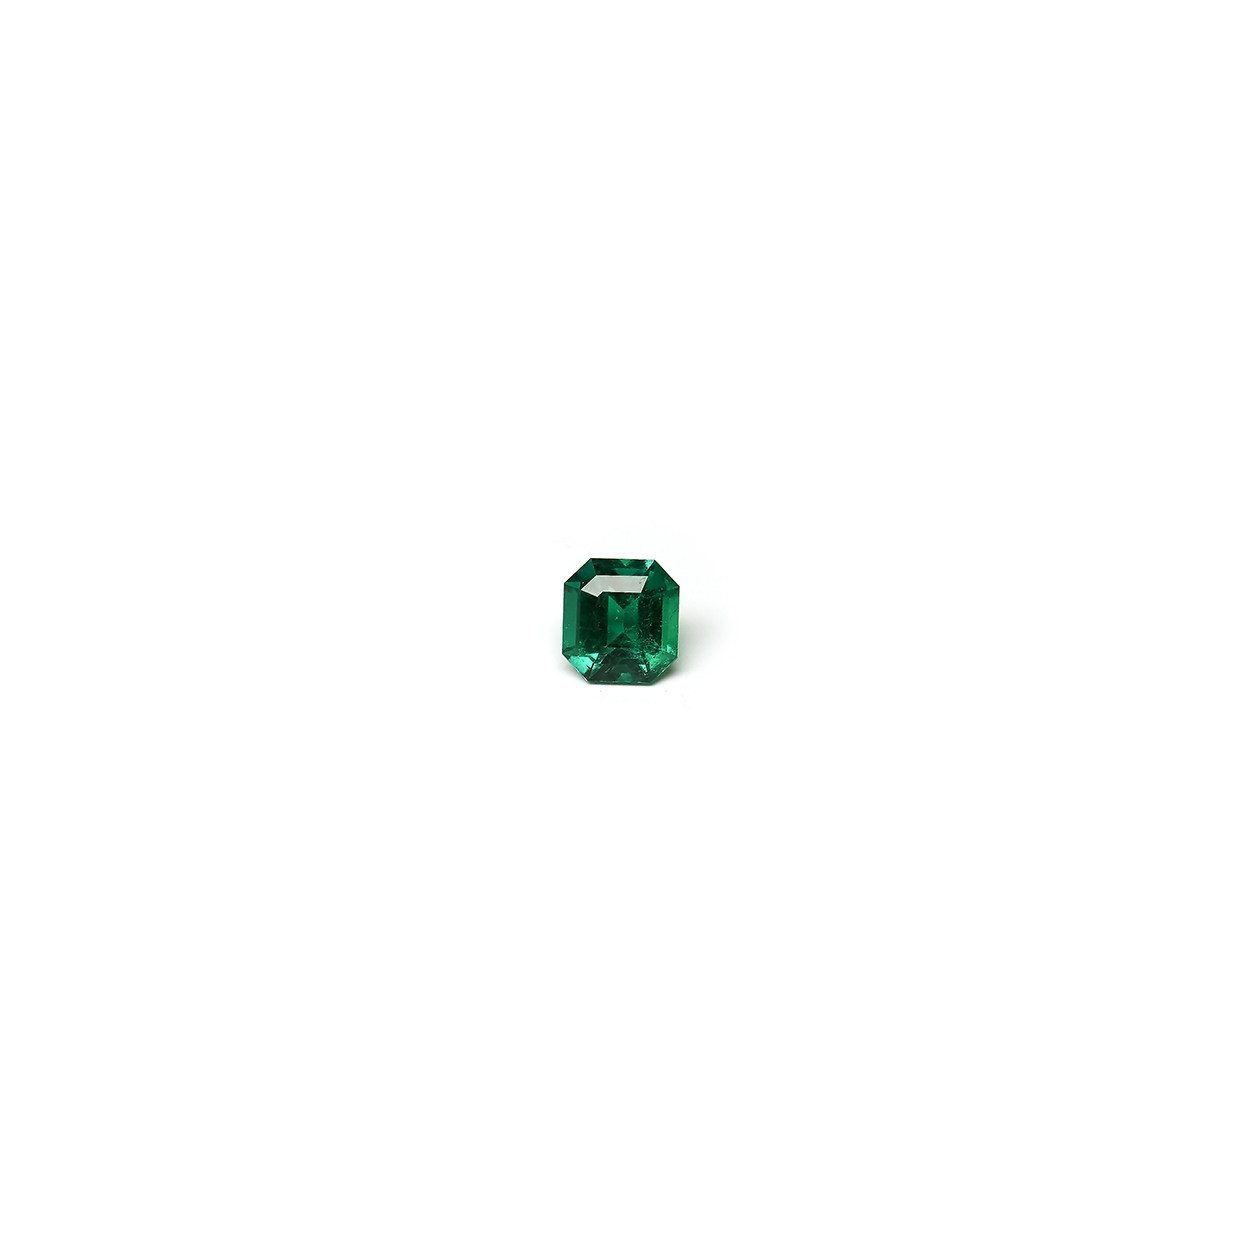 4 carat emerald cut